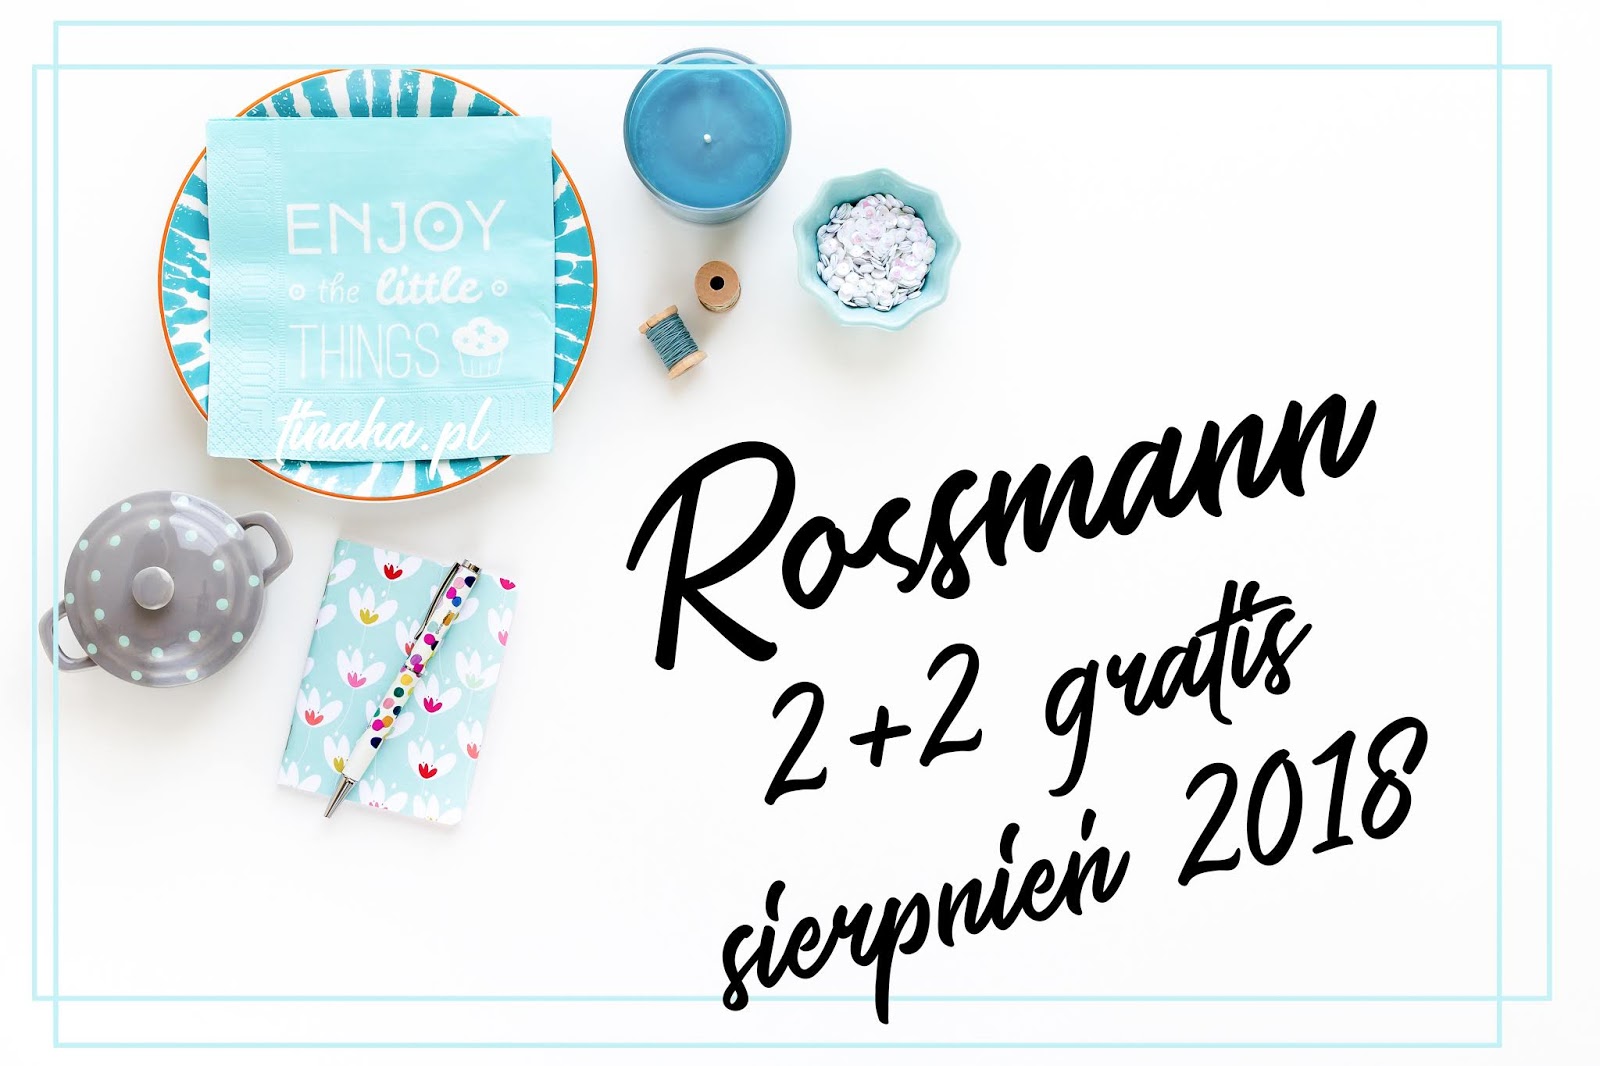 Promocja, która powinna Cię zainteresować: Rossmann 2+2 gratis ( sierpień 2018 )